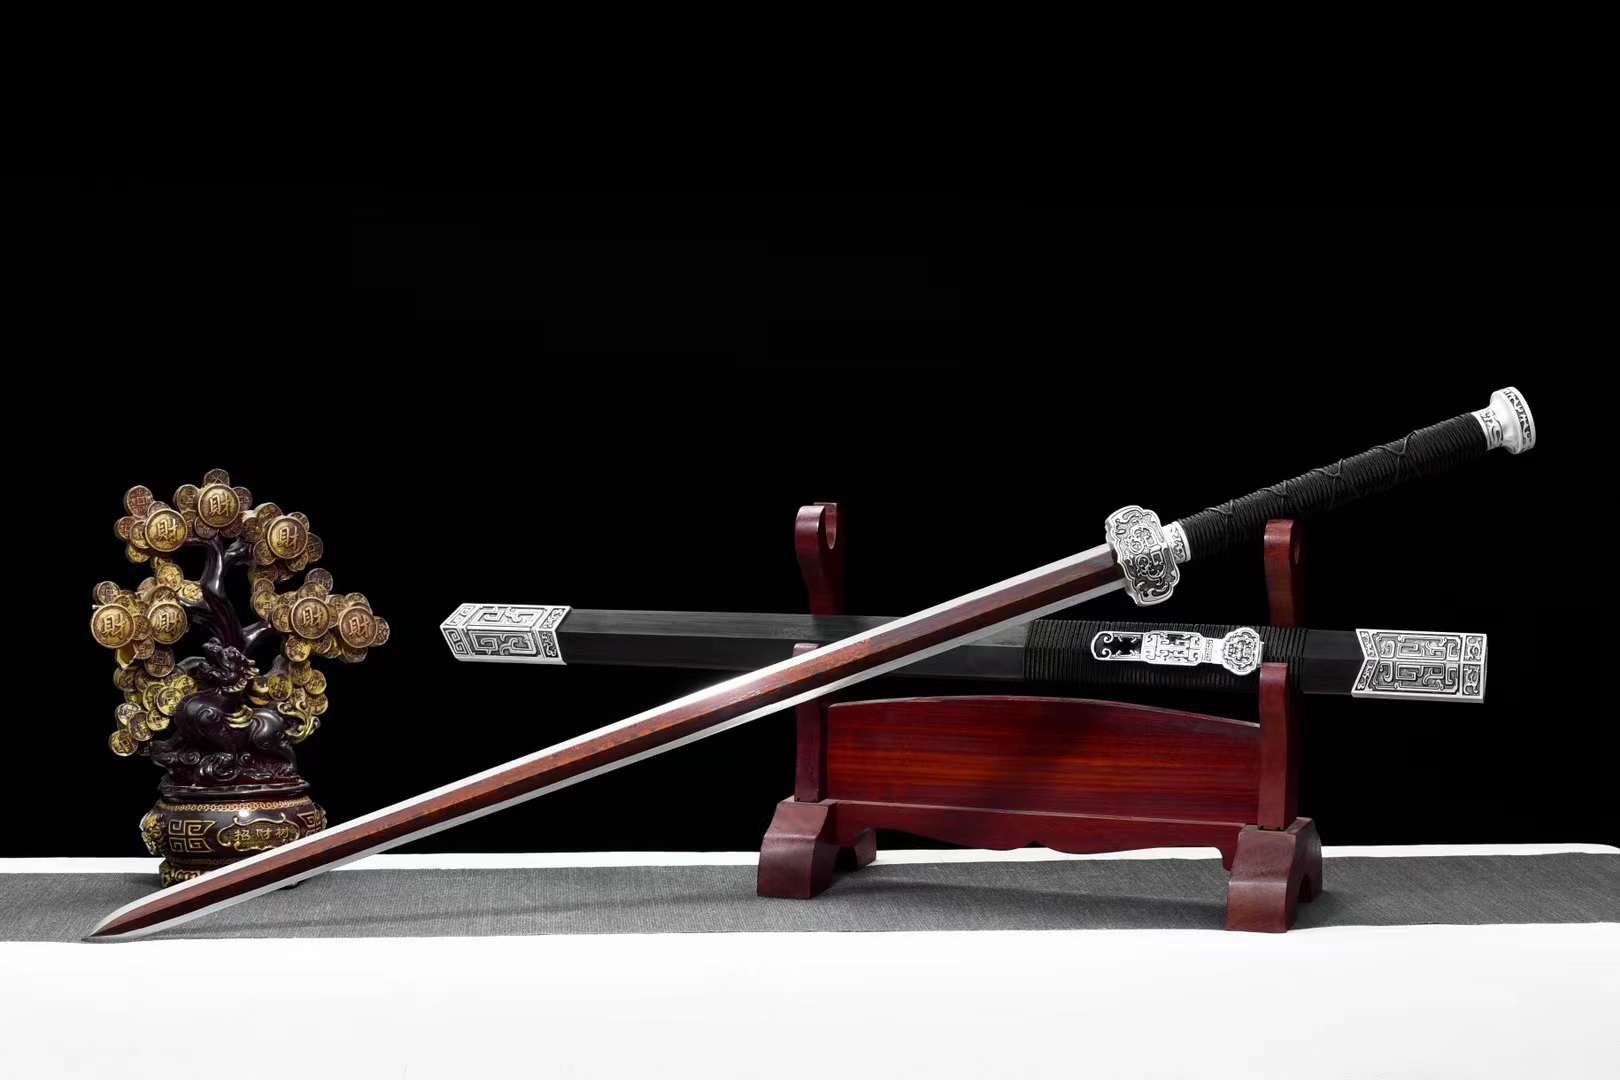 The Aka Unsho Handmade Chinese Sword Pattern Steel-Romance of Men